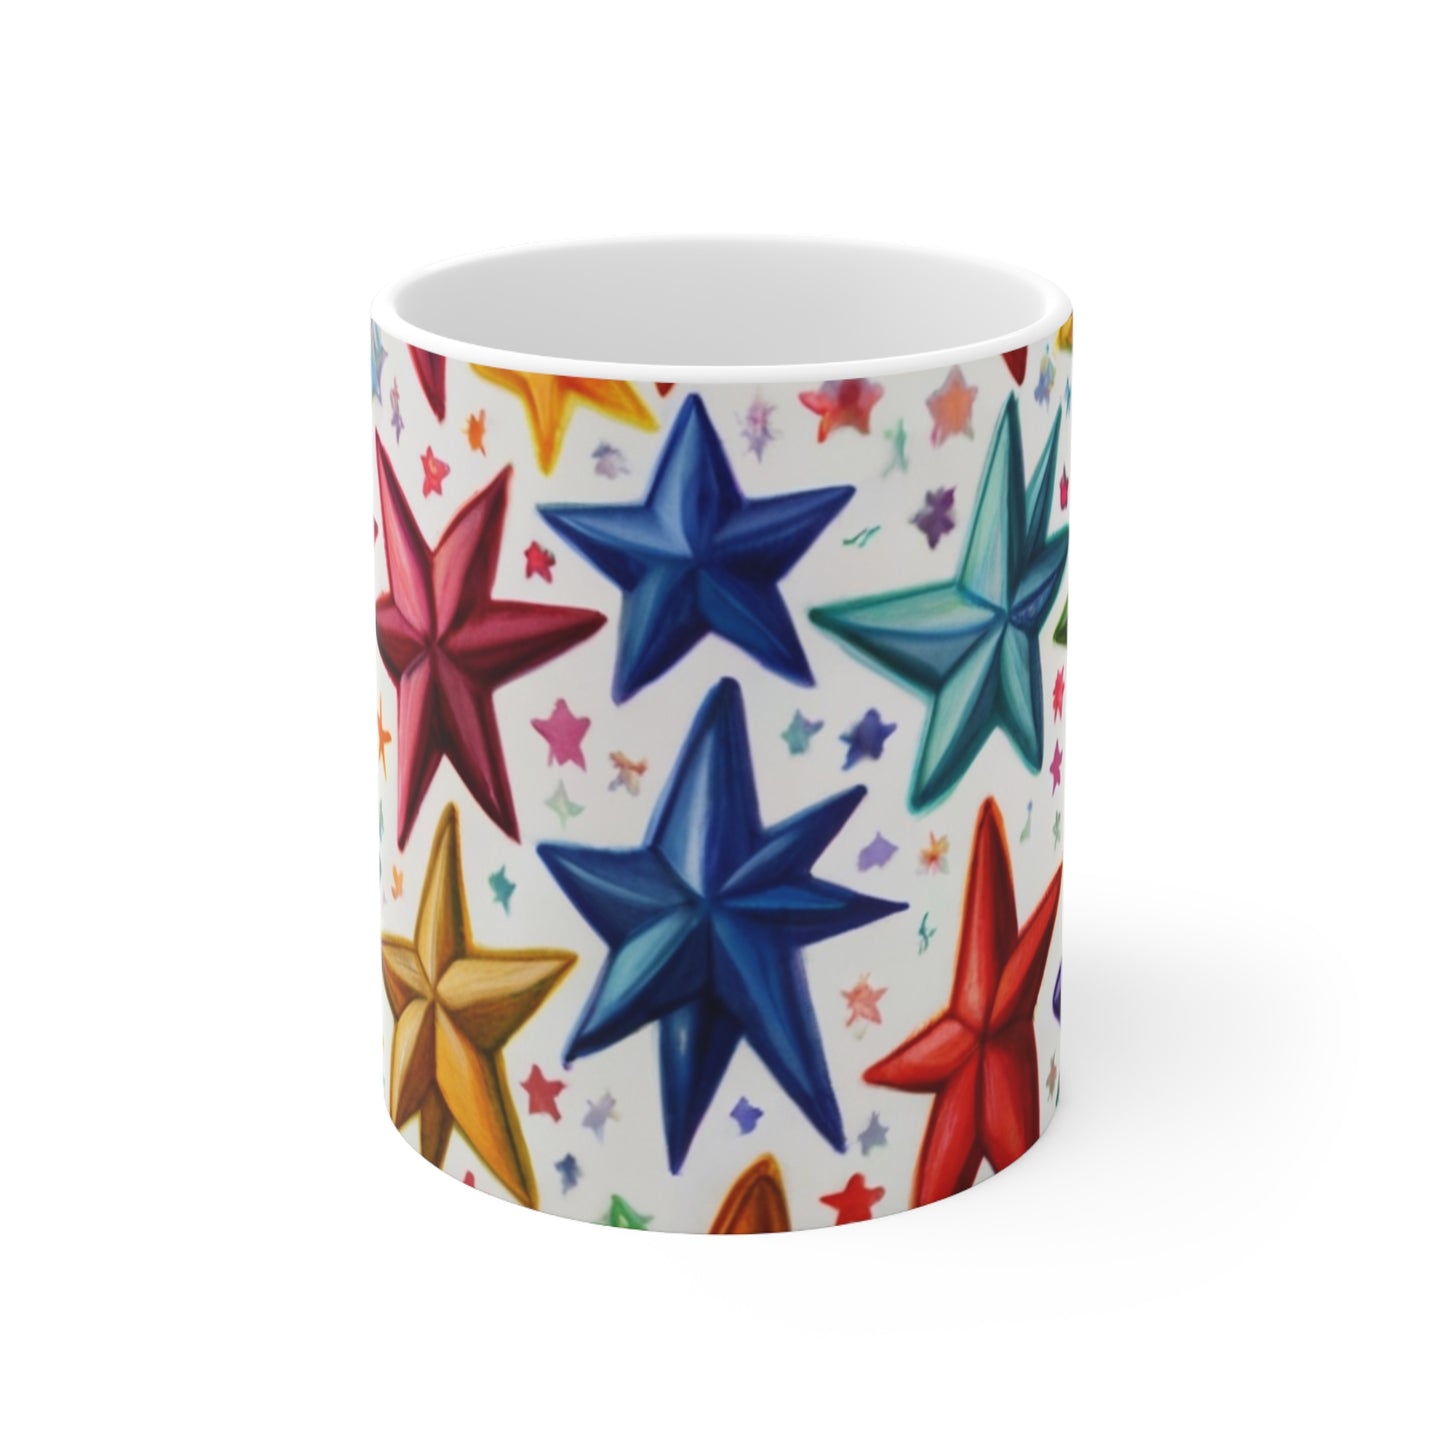 Colourful Stars Mug - Ceramic Coffee Mug 11oz